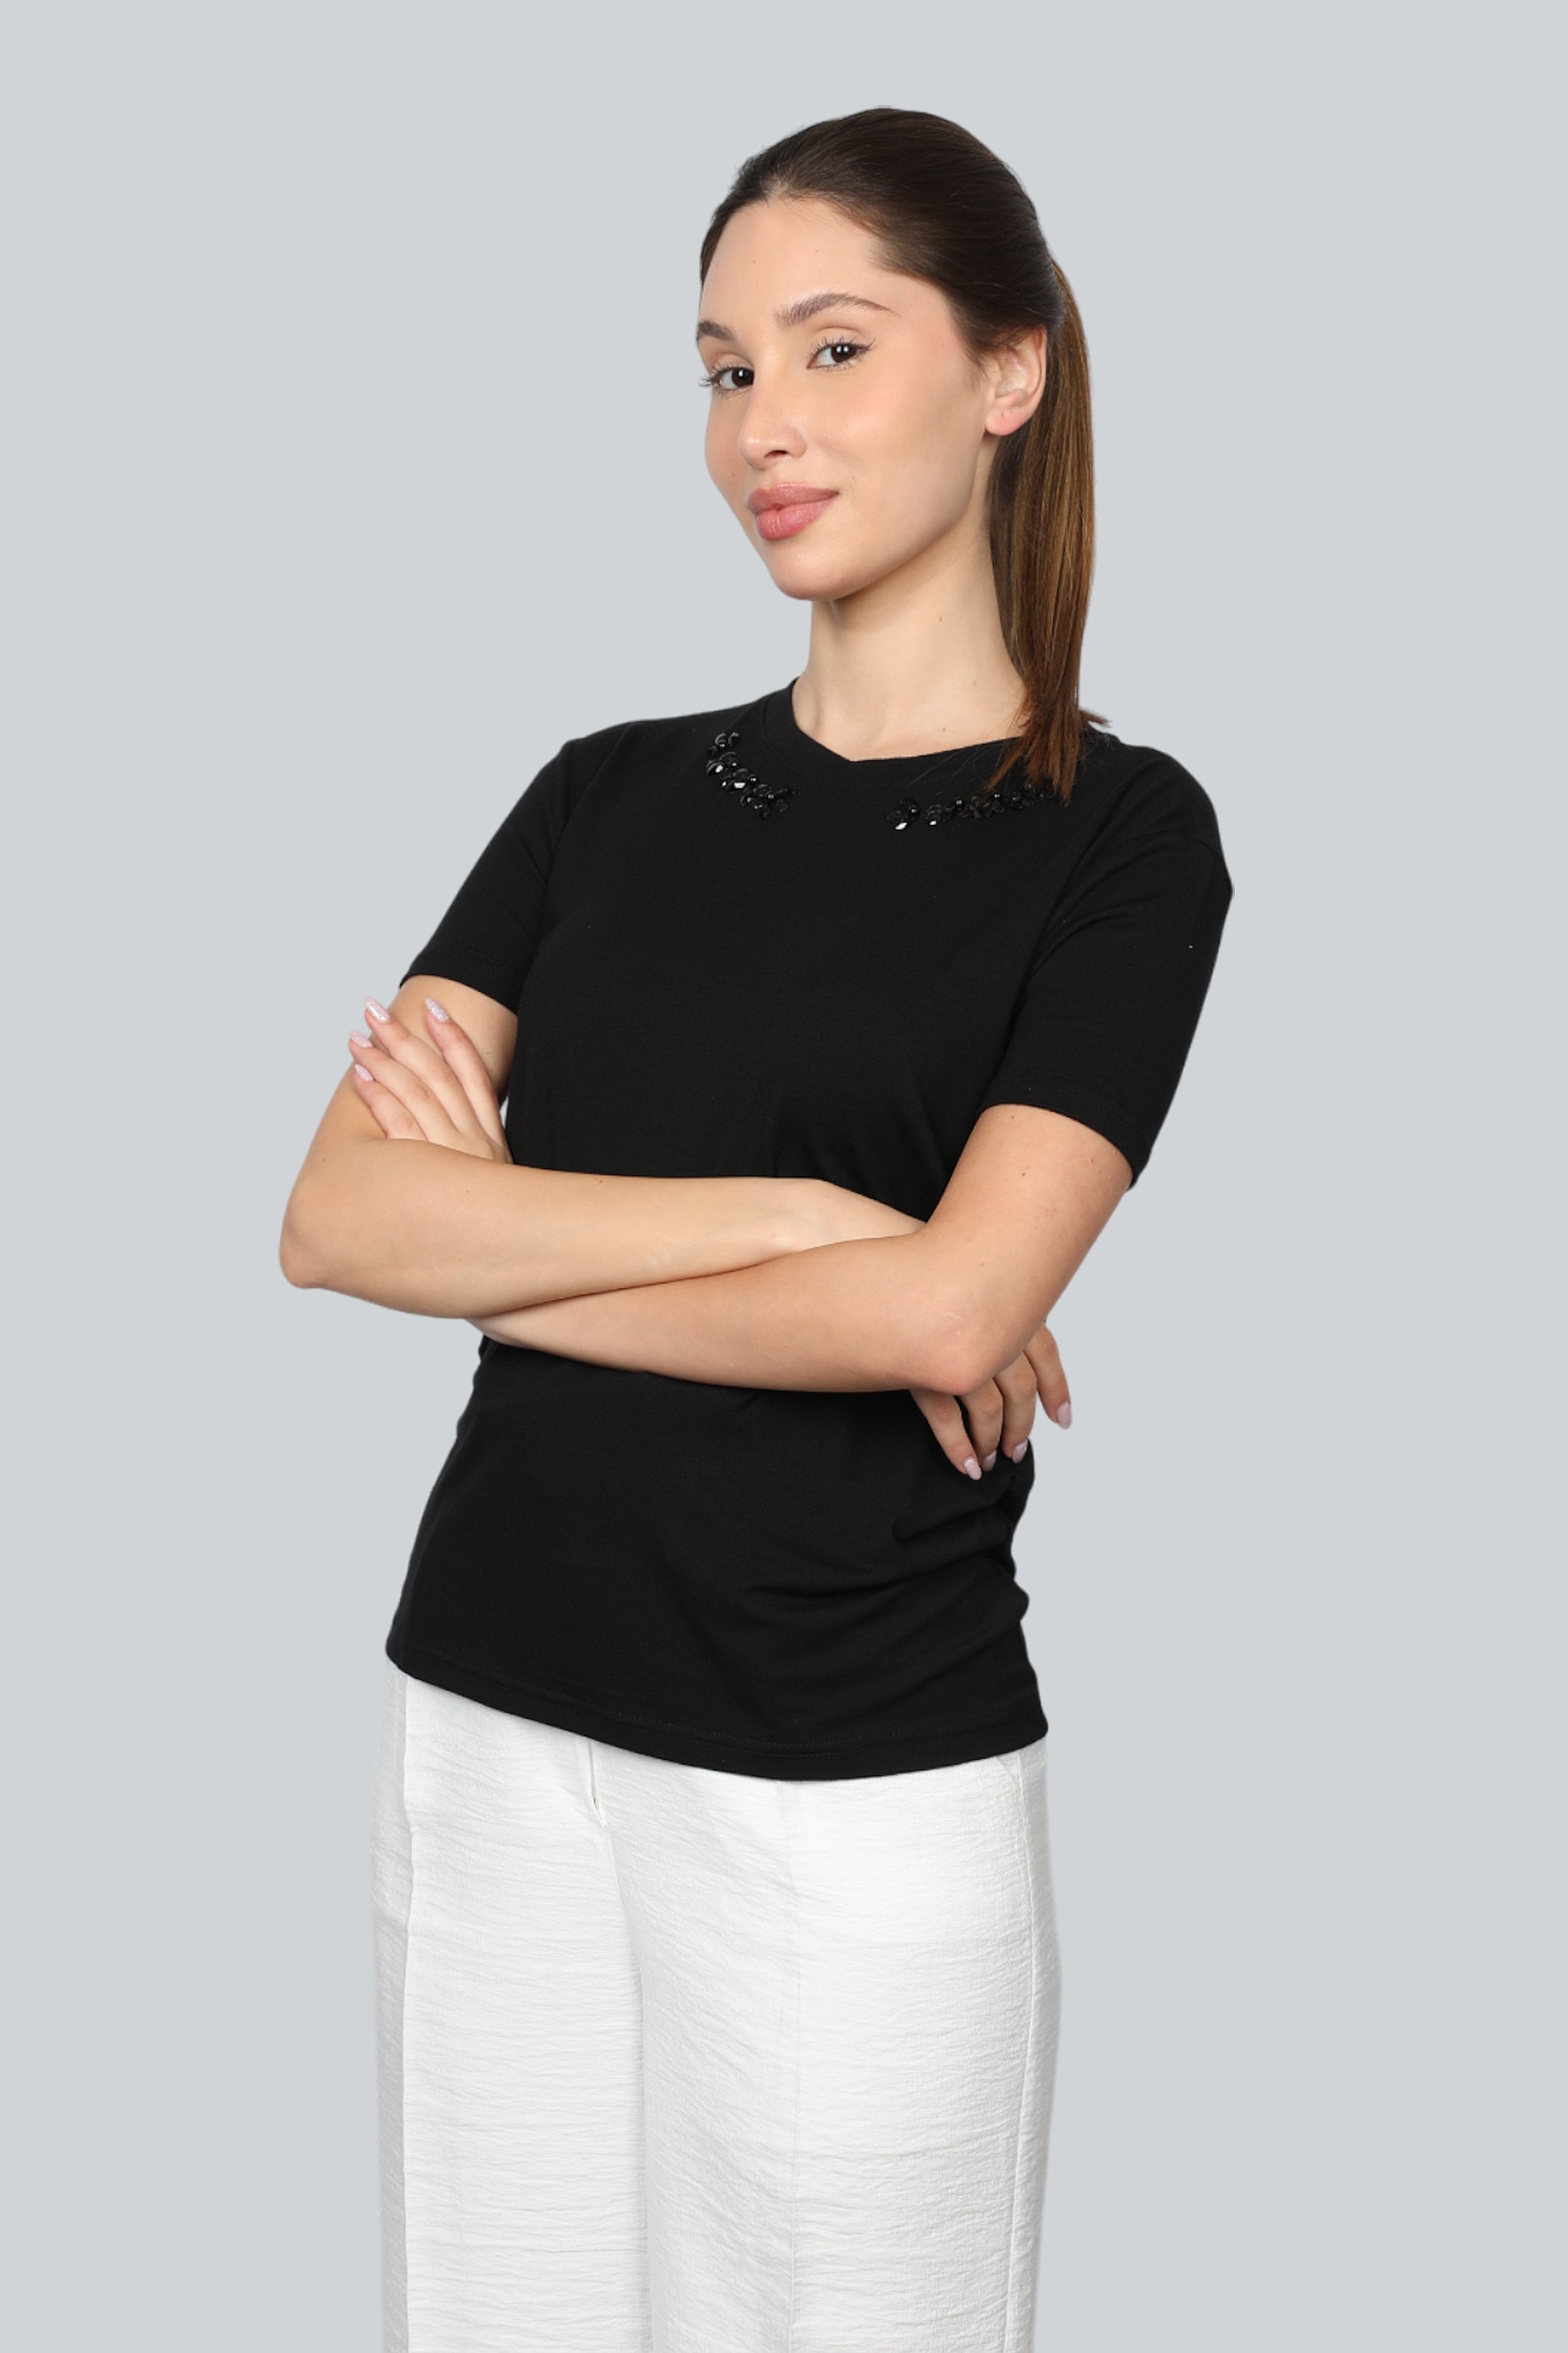 Women Short Sleeves Black Top With Neck Design